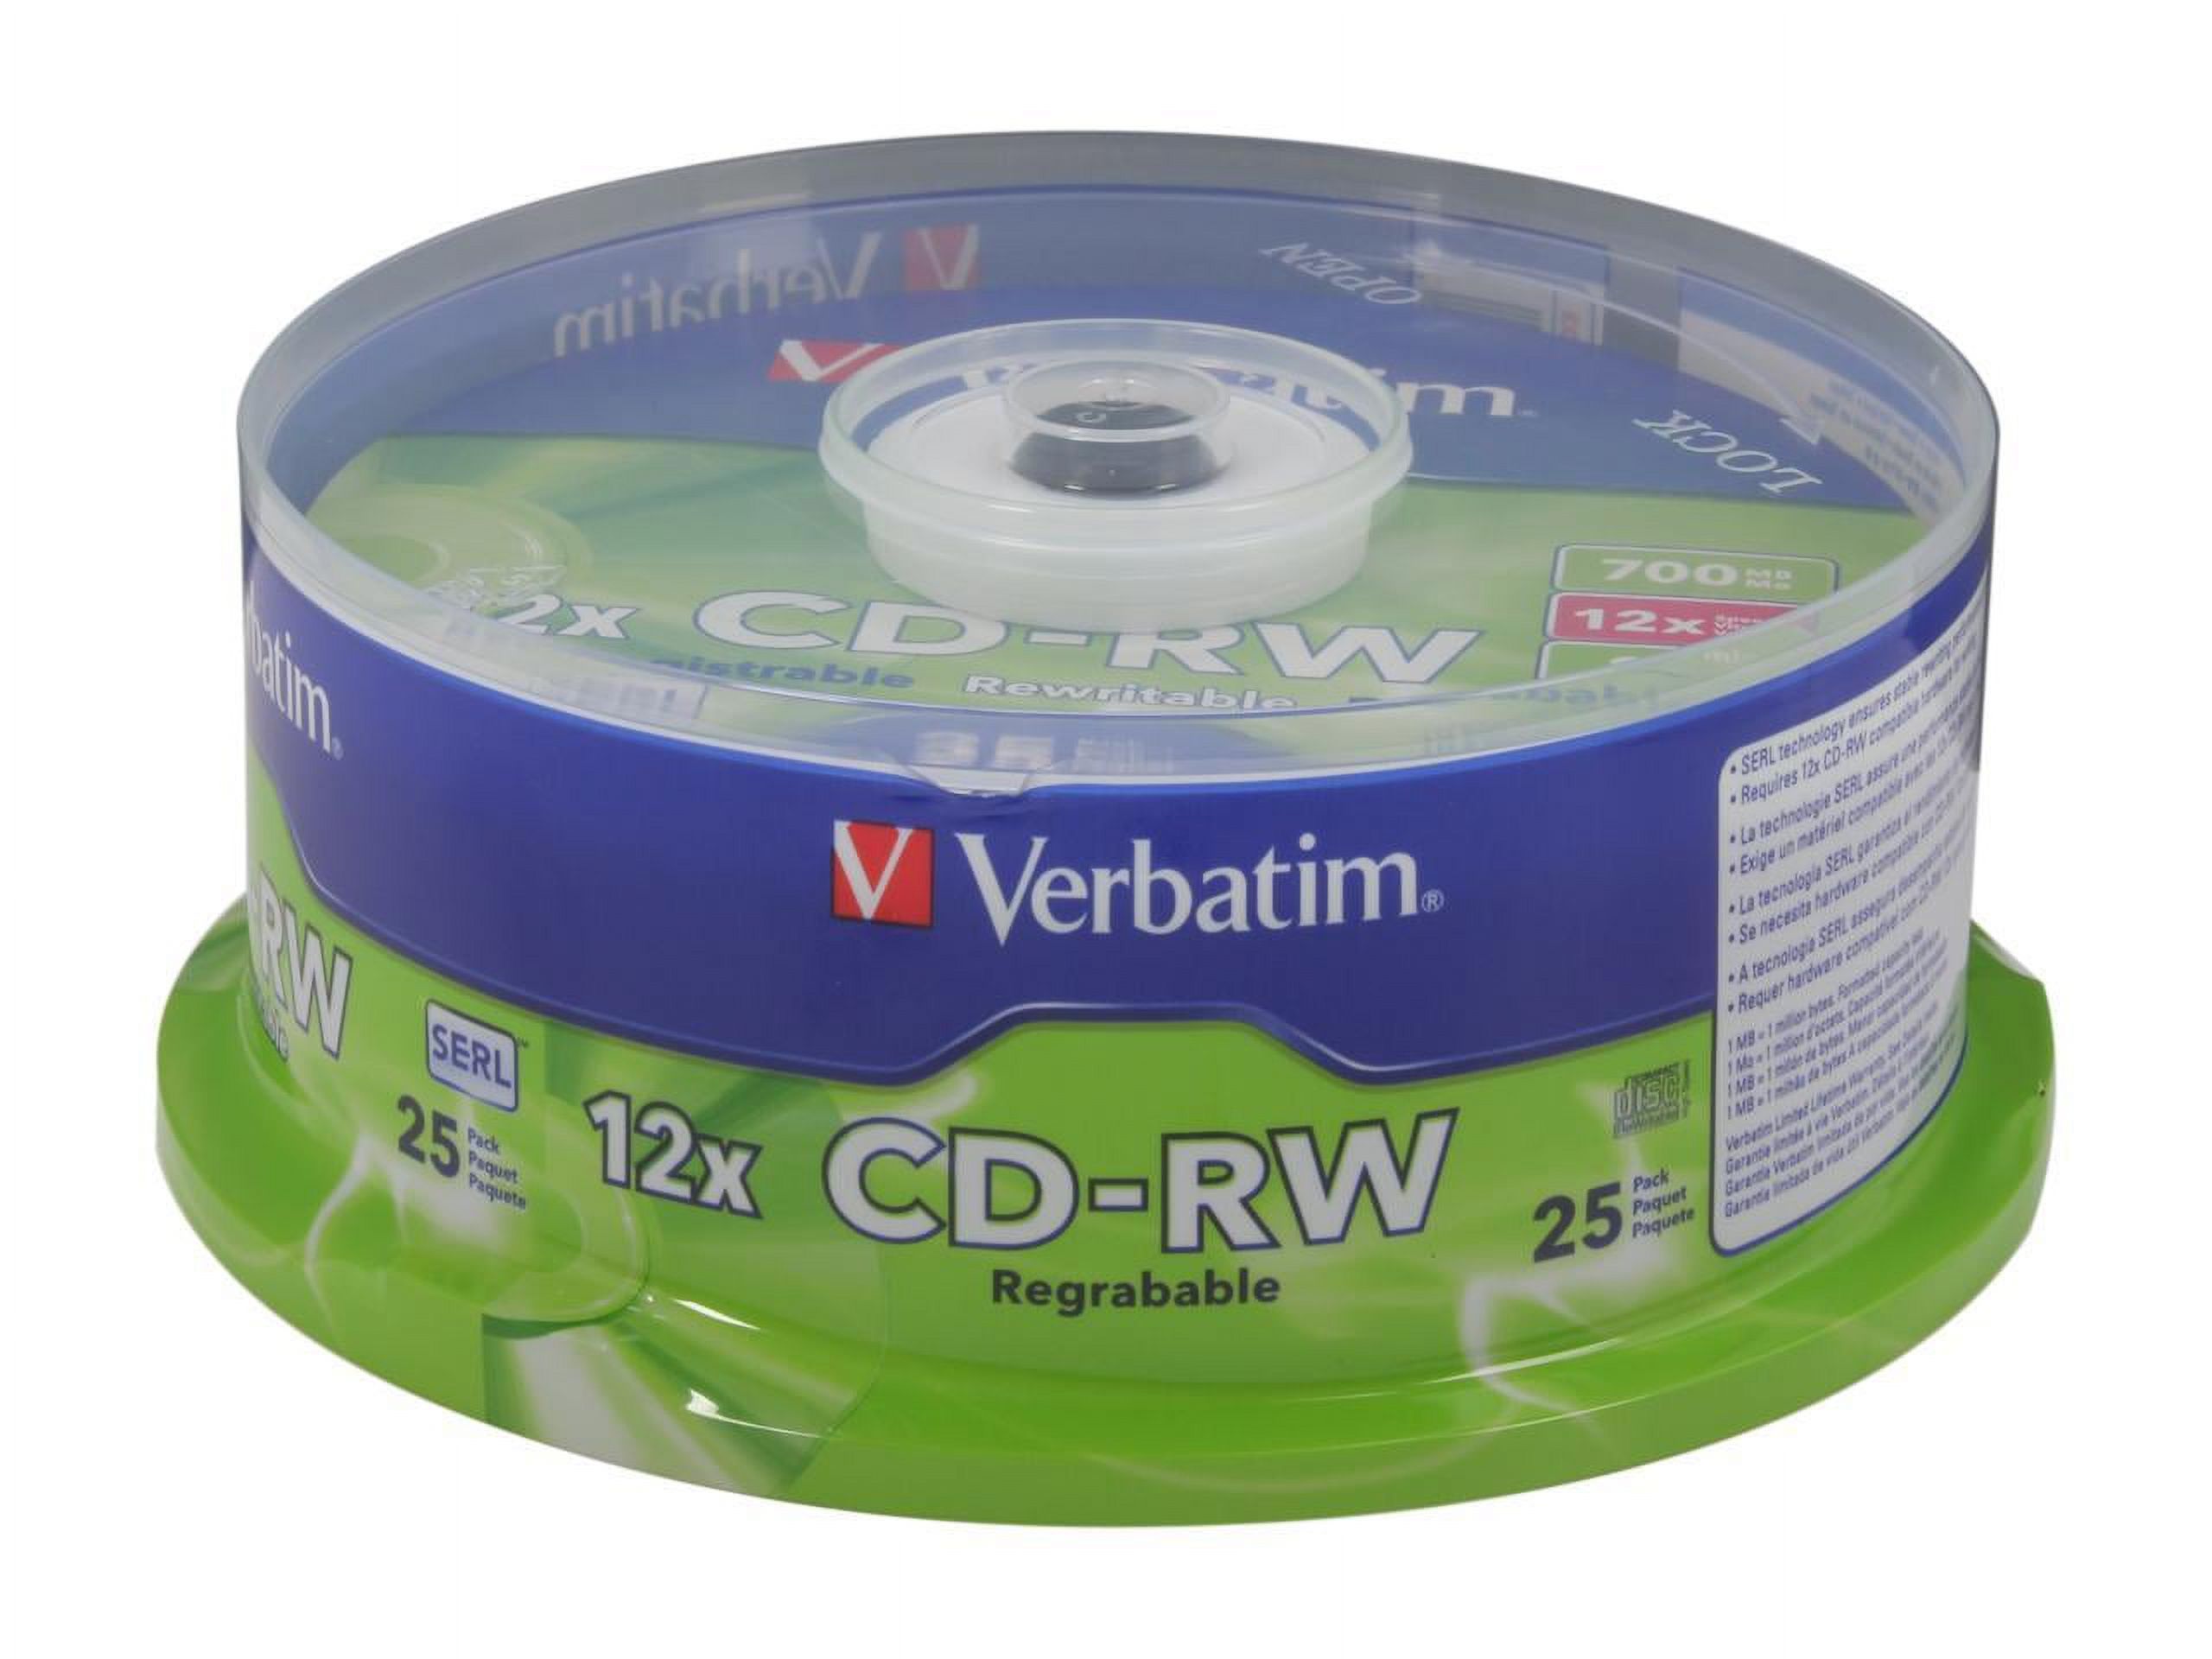 Verbatim 700MB 12X CD-RW 25 Packs Spindle Media Model 95155 - image 2 of 2